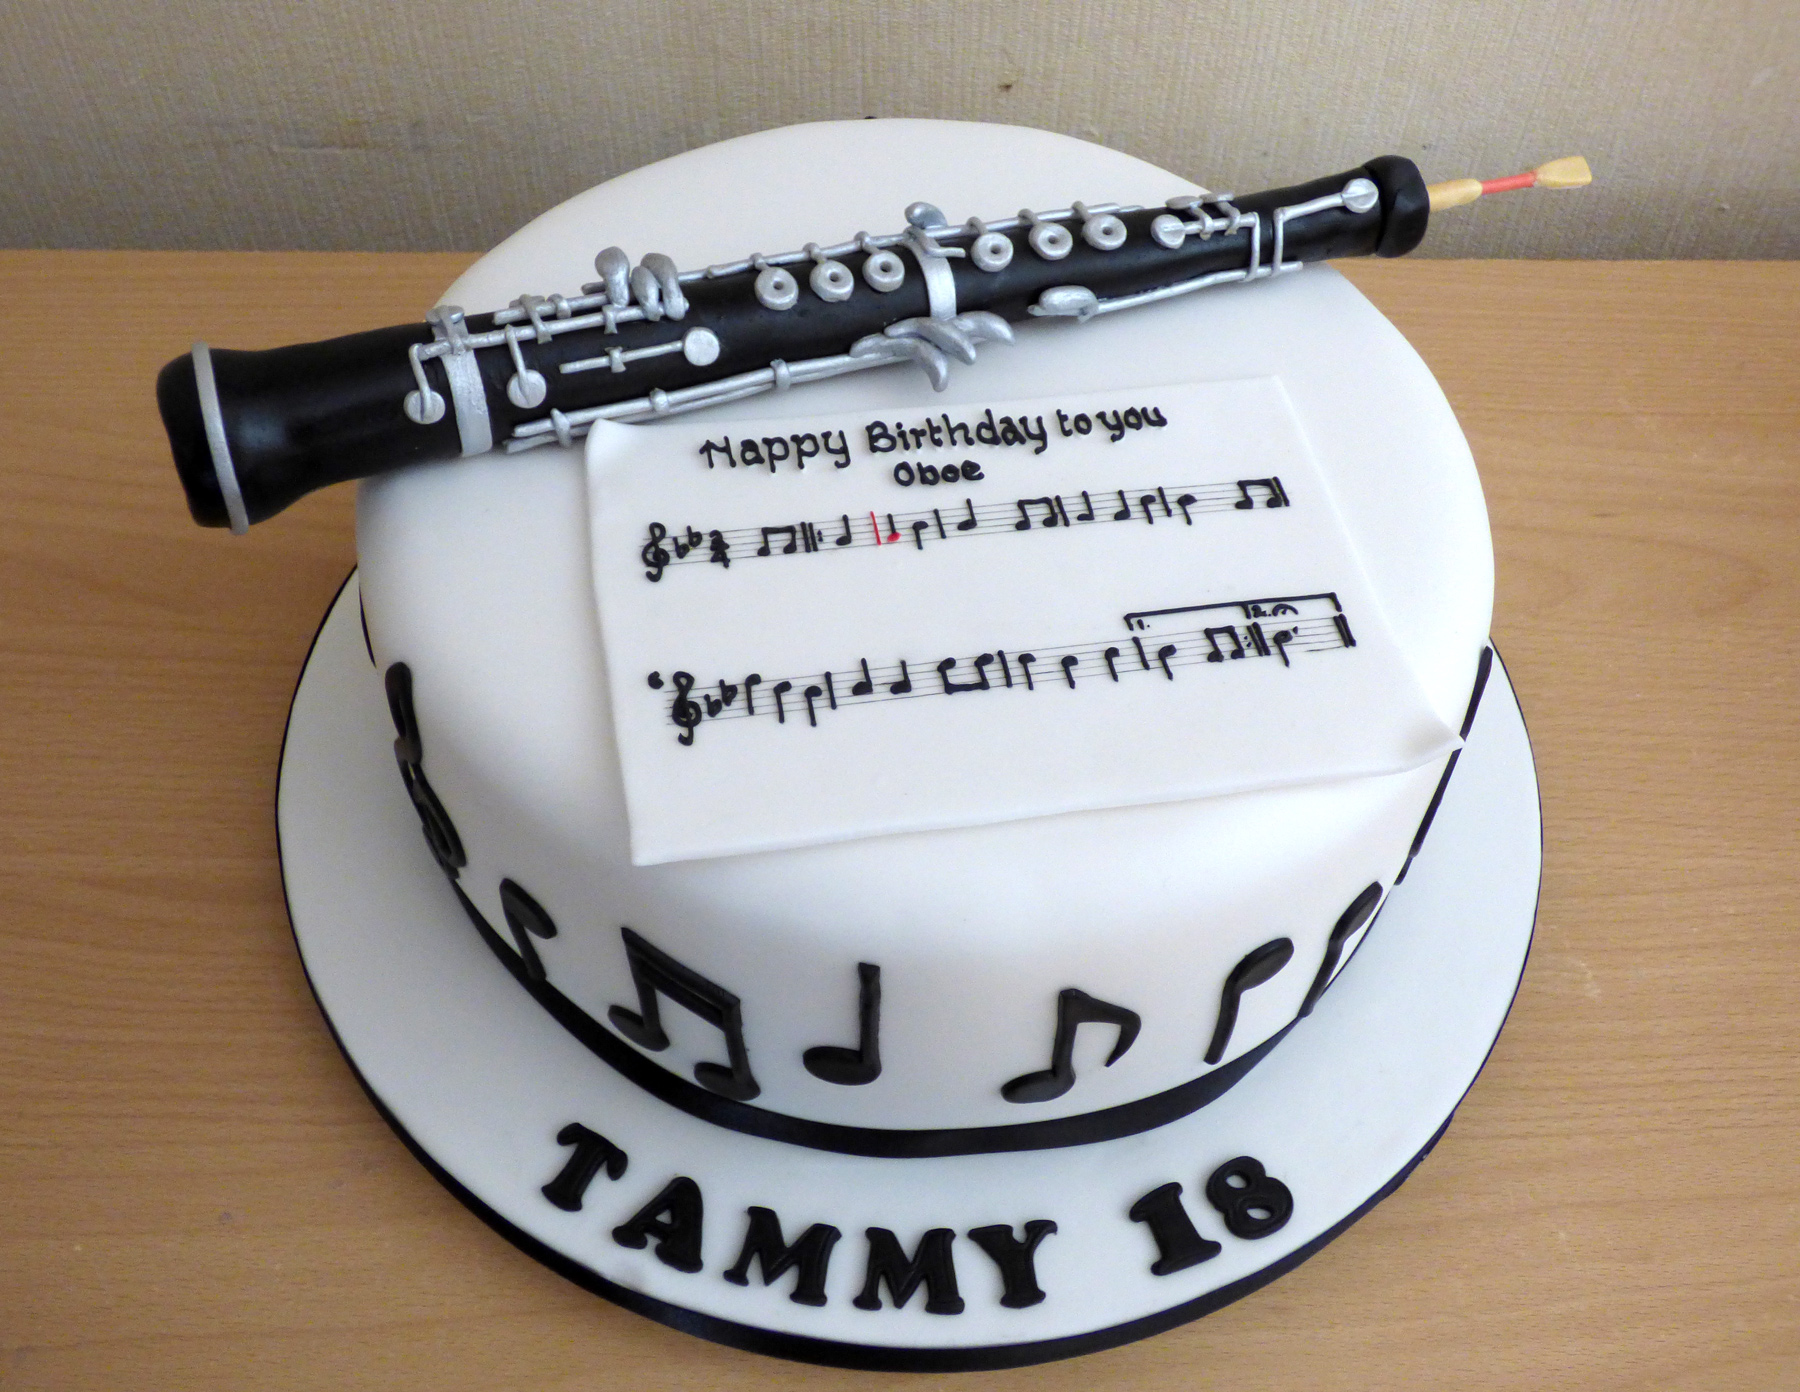 Cakes by Ruth: Jim's Clarinet Birthday Cake 2009